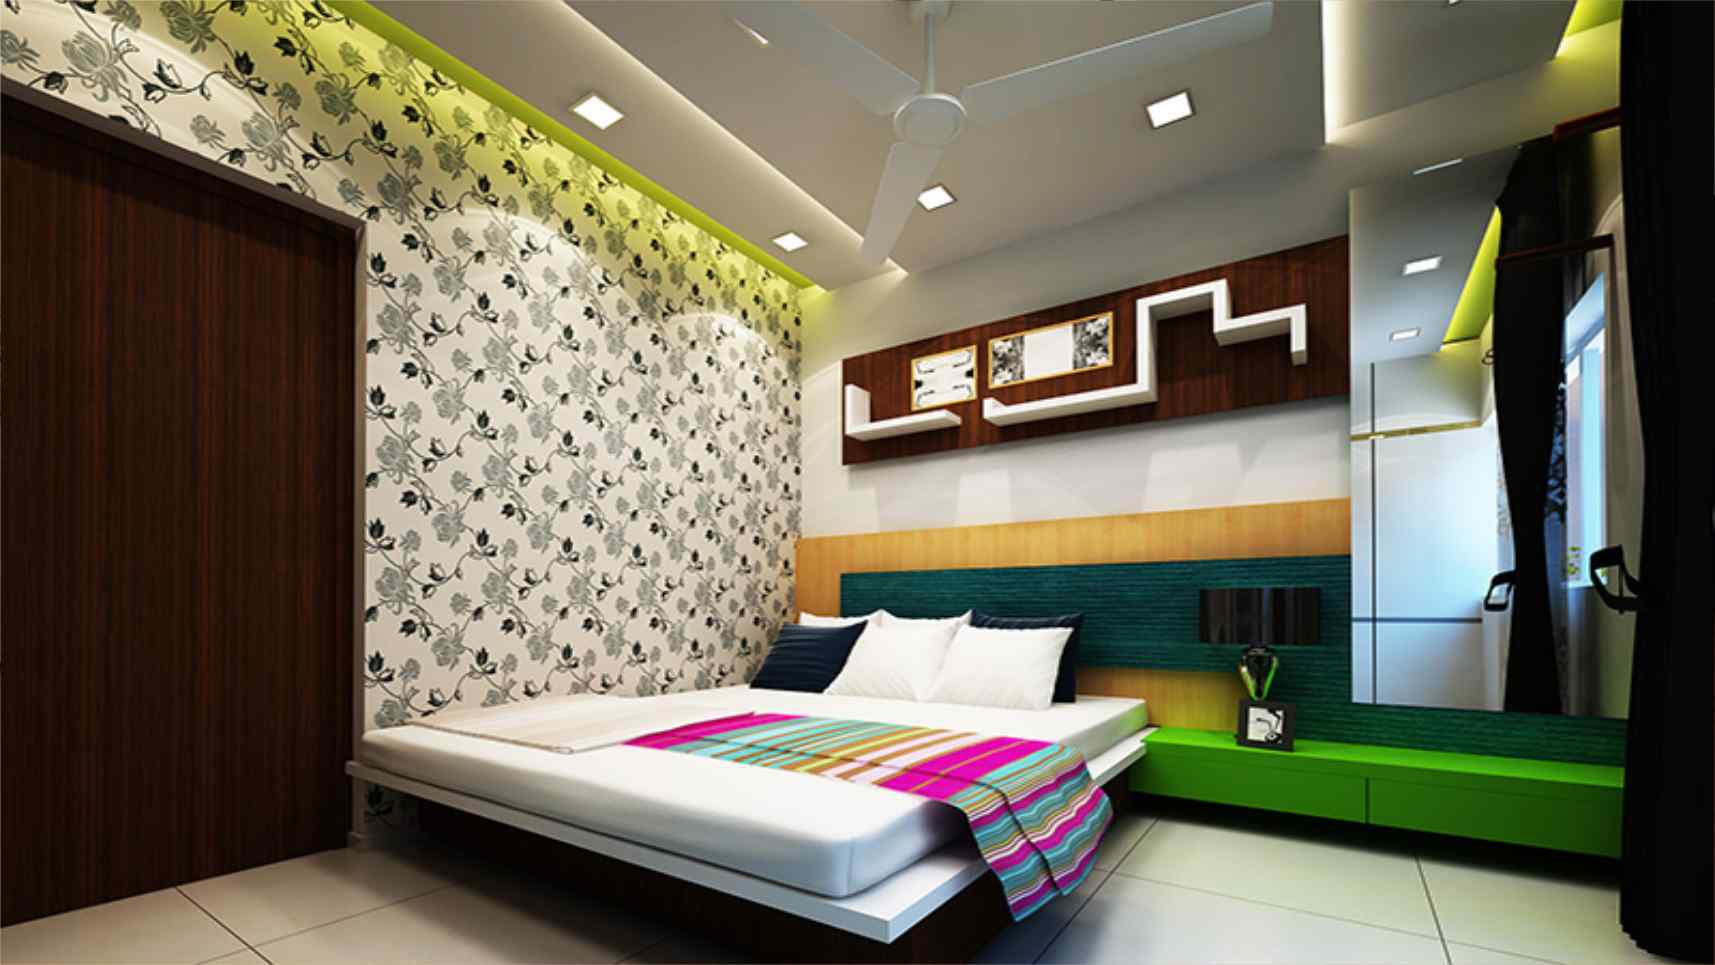 Home Interior Wallpaper Shop in Coimbatore